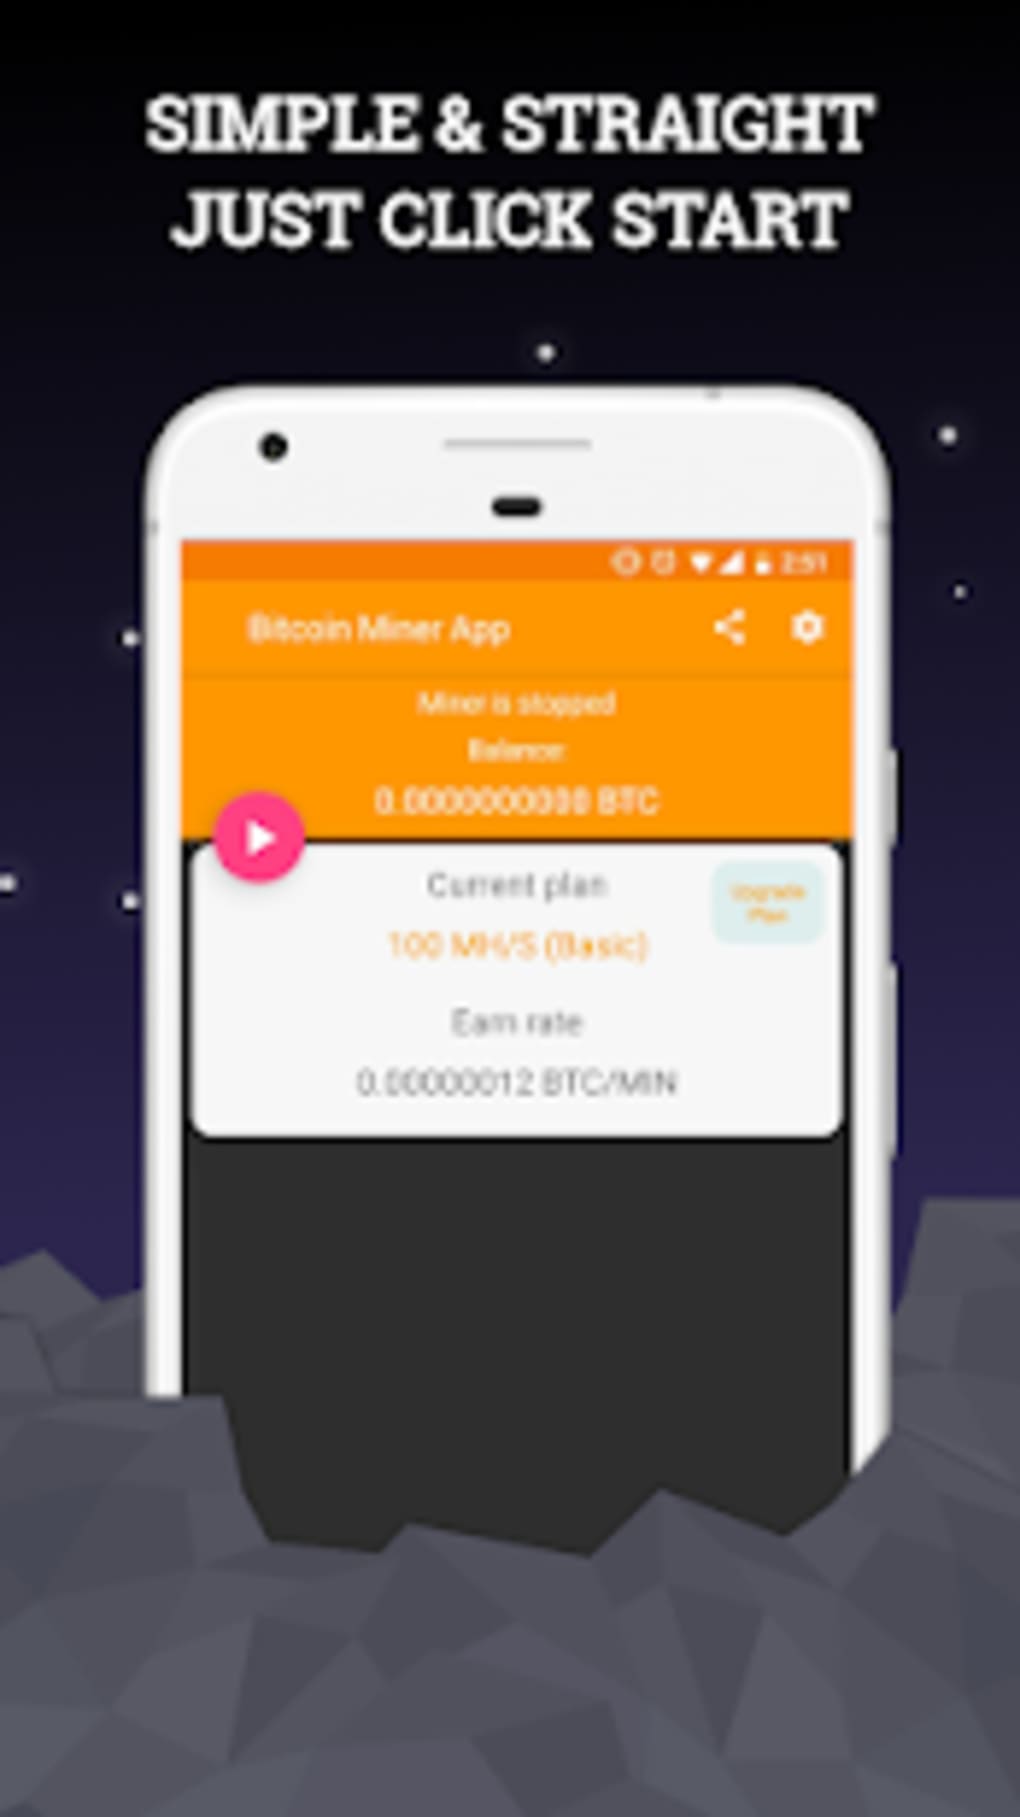 Free bitcoin miner earn btc app